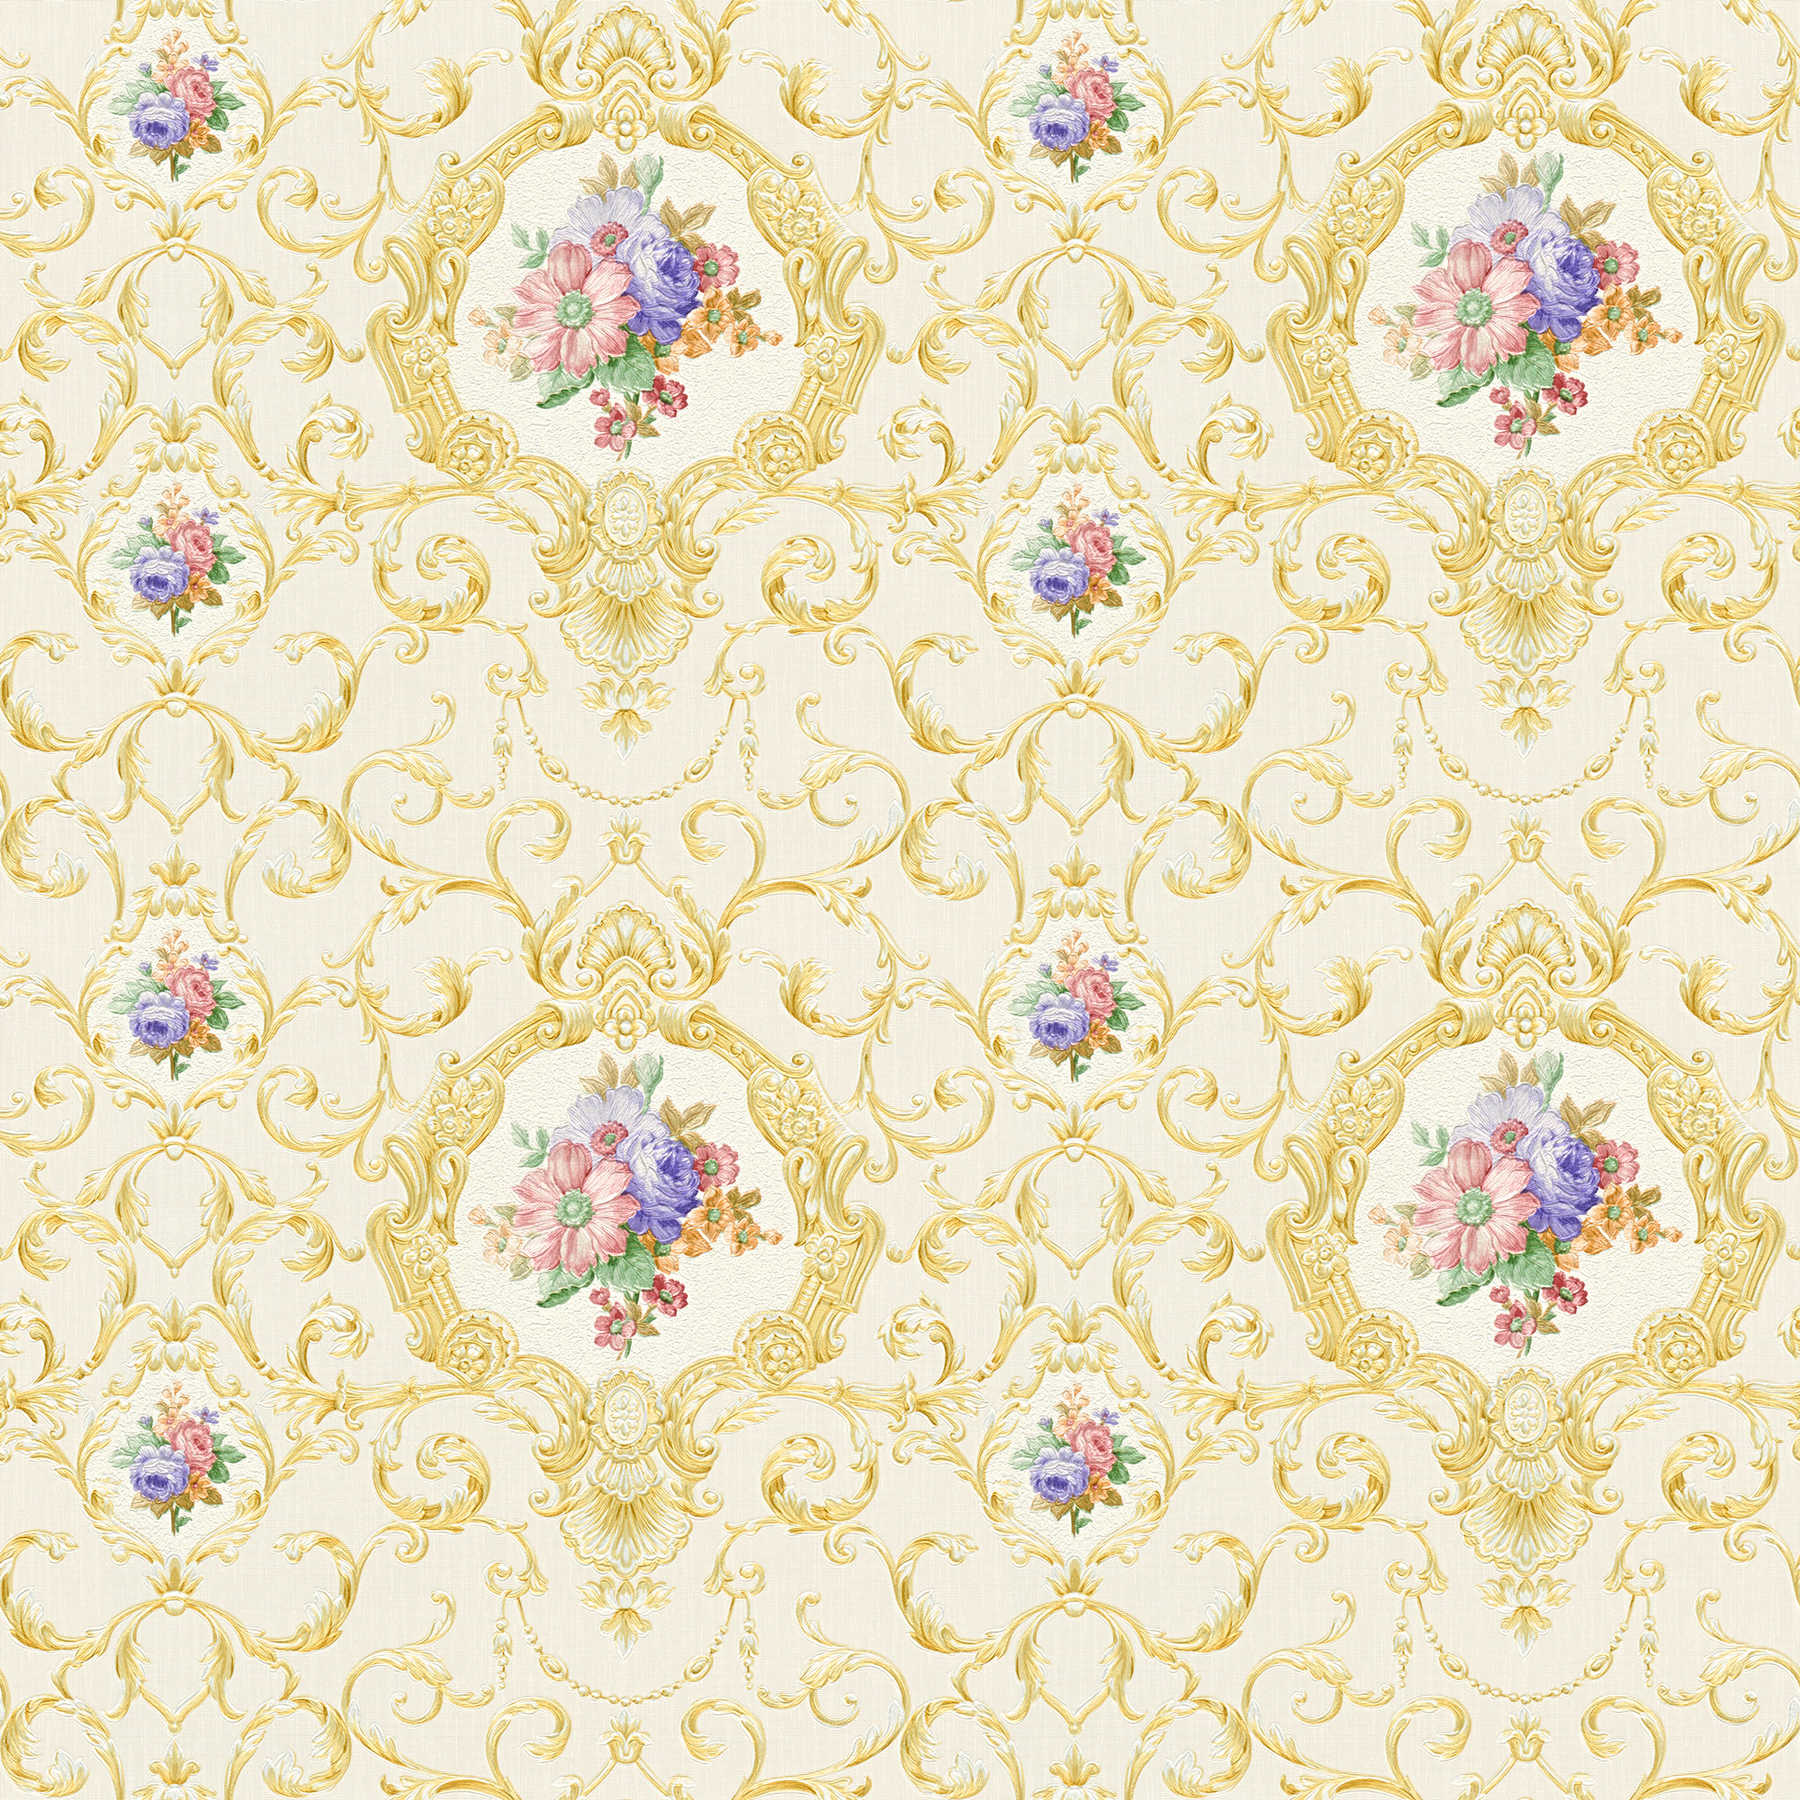 Luxury wallpaper with ornamental pattern & floral bouquet - cream, metallic
